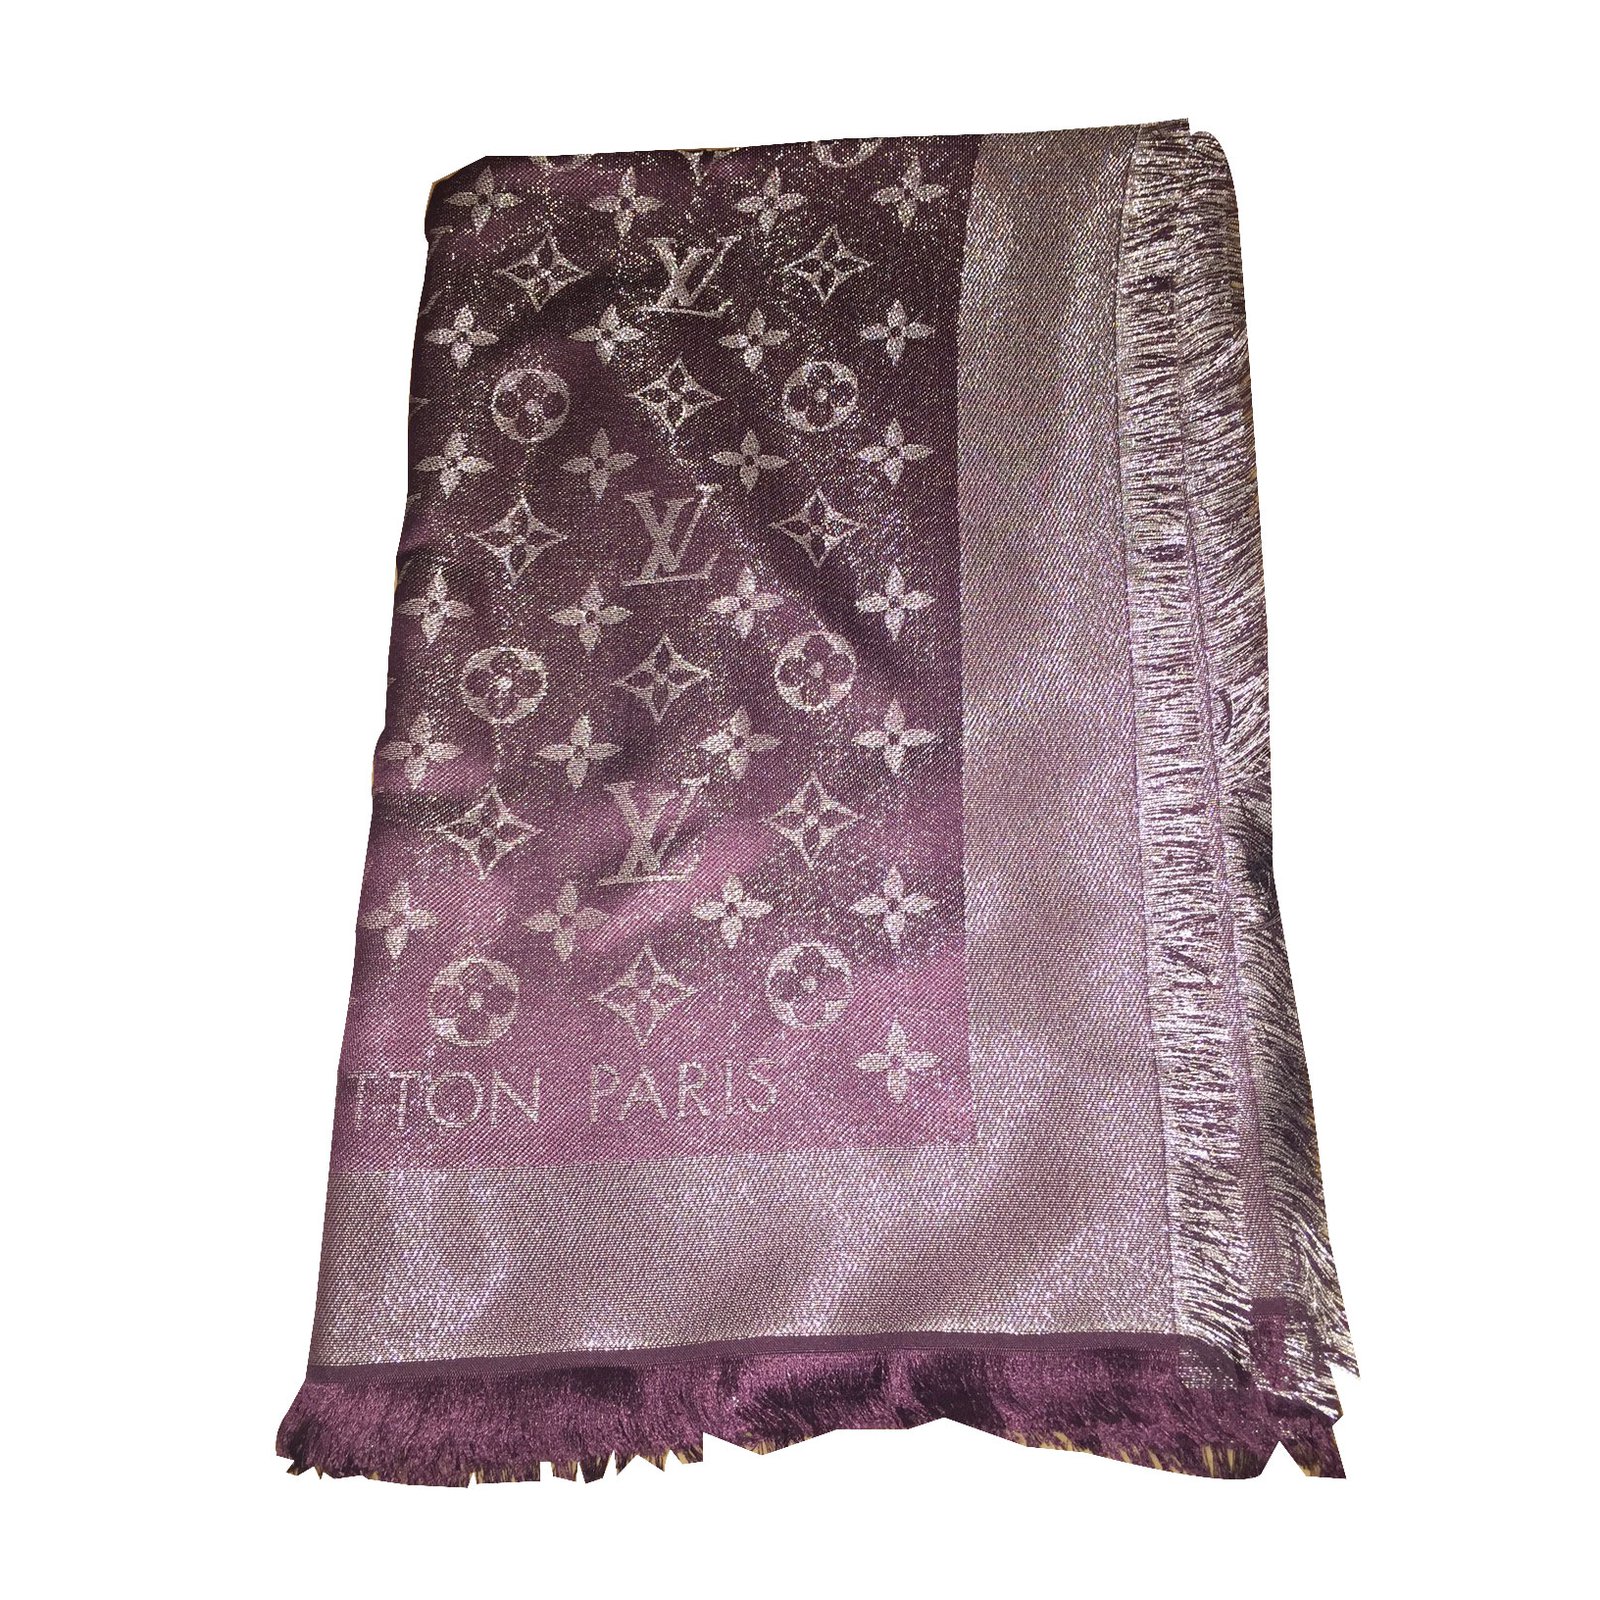 LOUIS VUITTON LOUIS VUITTON shawl scarf scarves wrap M75124 silk